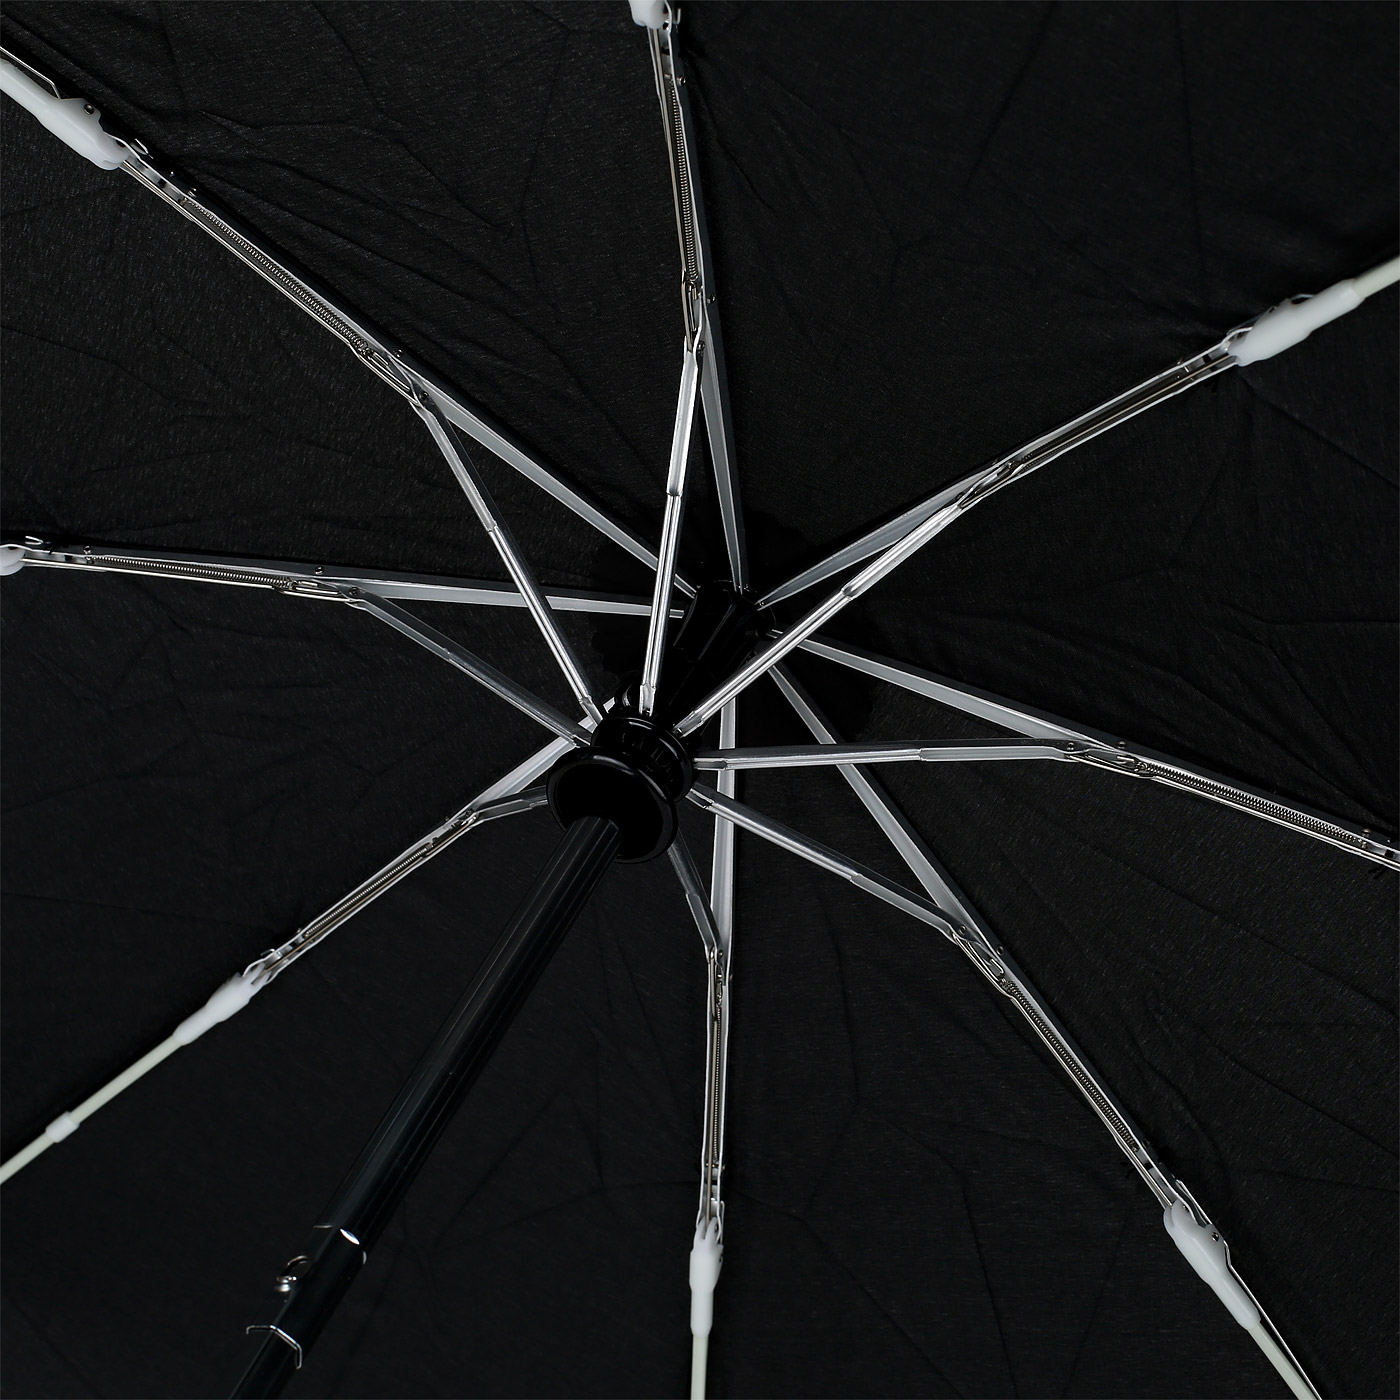 Черный зонт Chatte 